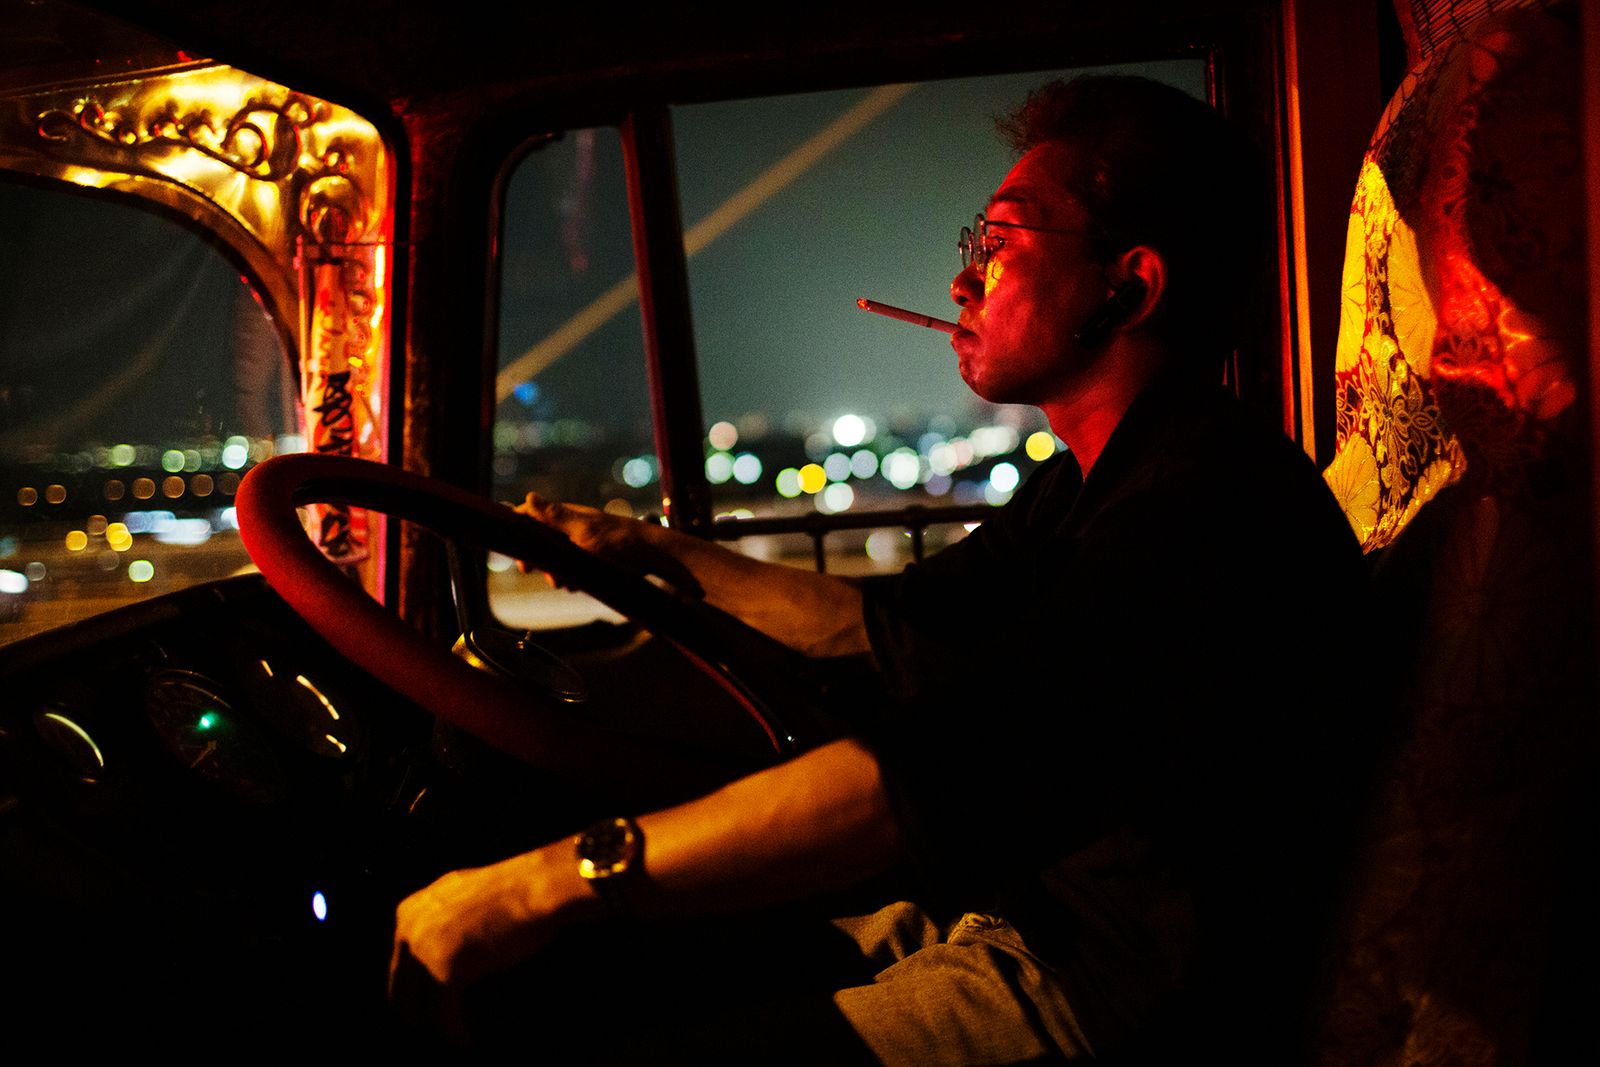 © Julie Glassberg - Driver behind the wheel of main character truck, Ichiban Boshi.